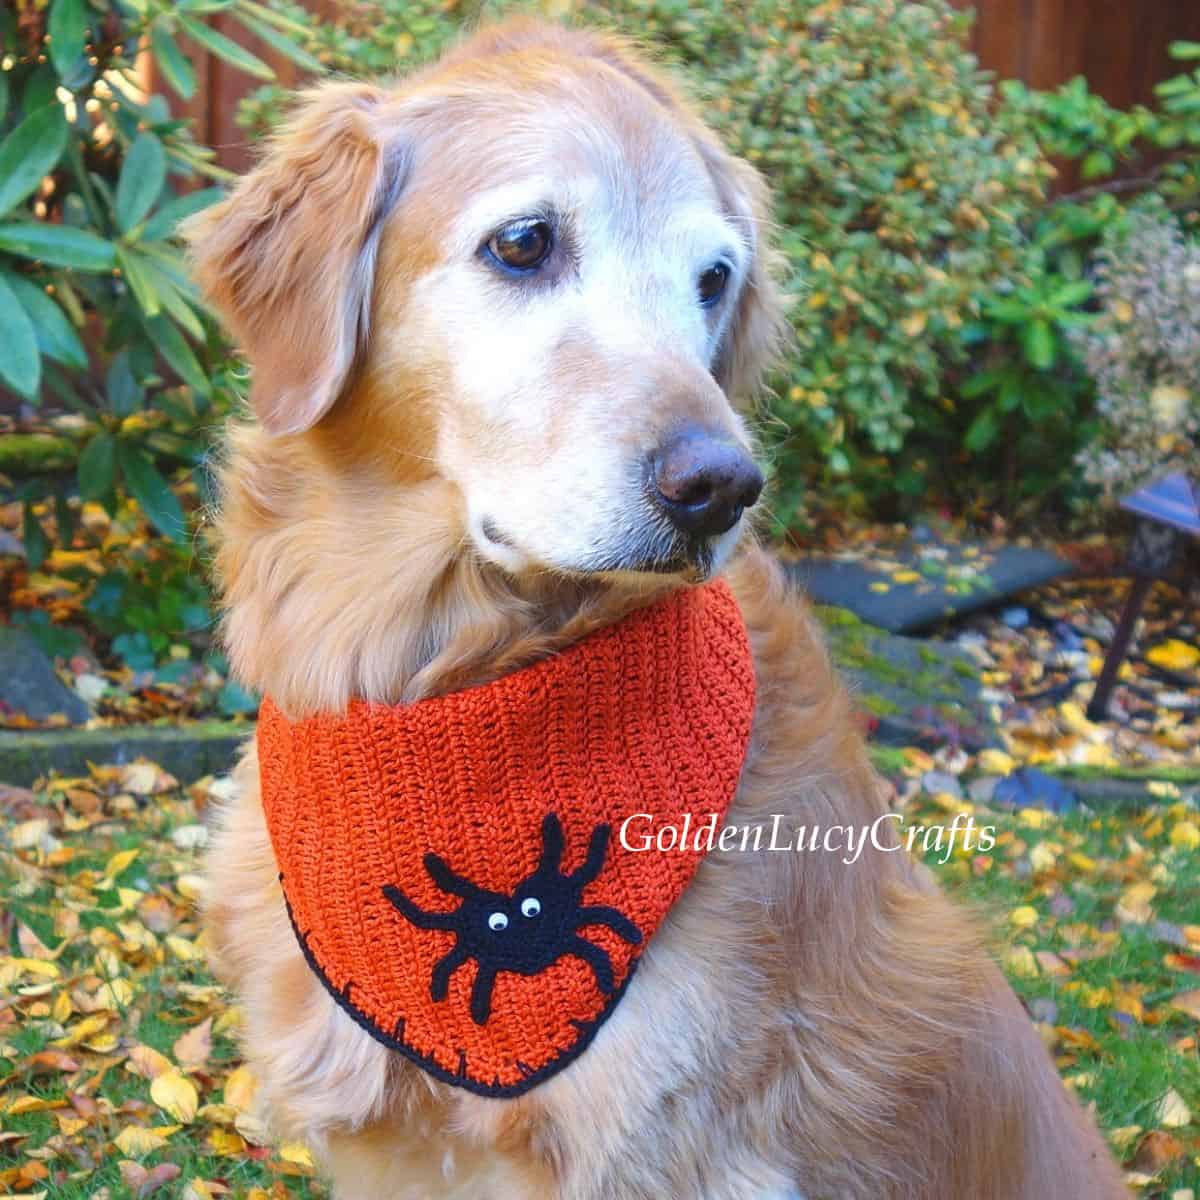 Dog dressed in orange bandana with spider applique on it.